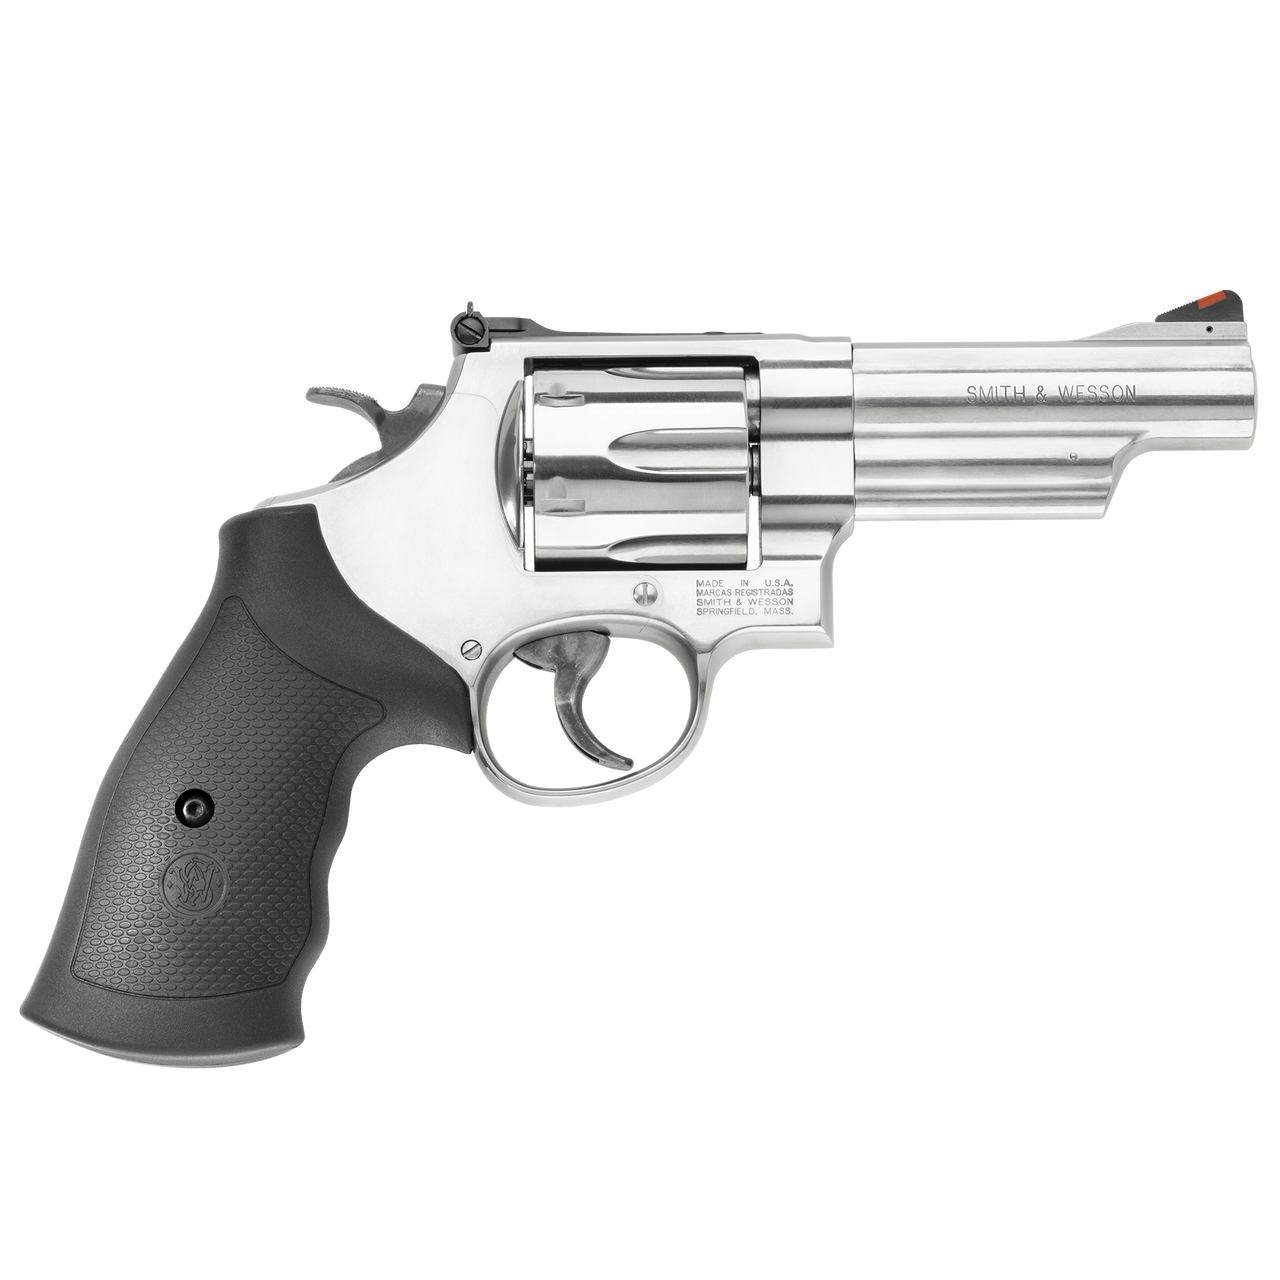 Buy Smith & Wesson Model 629 4 Barrel Revolver Online